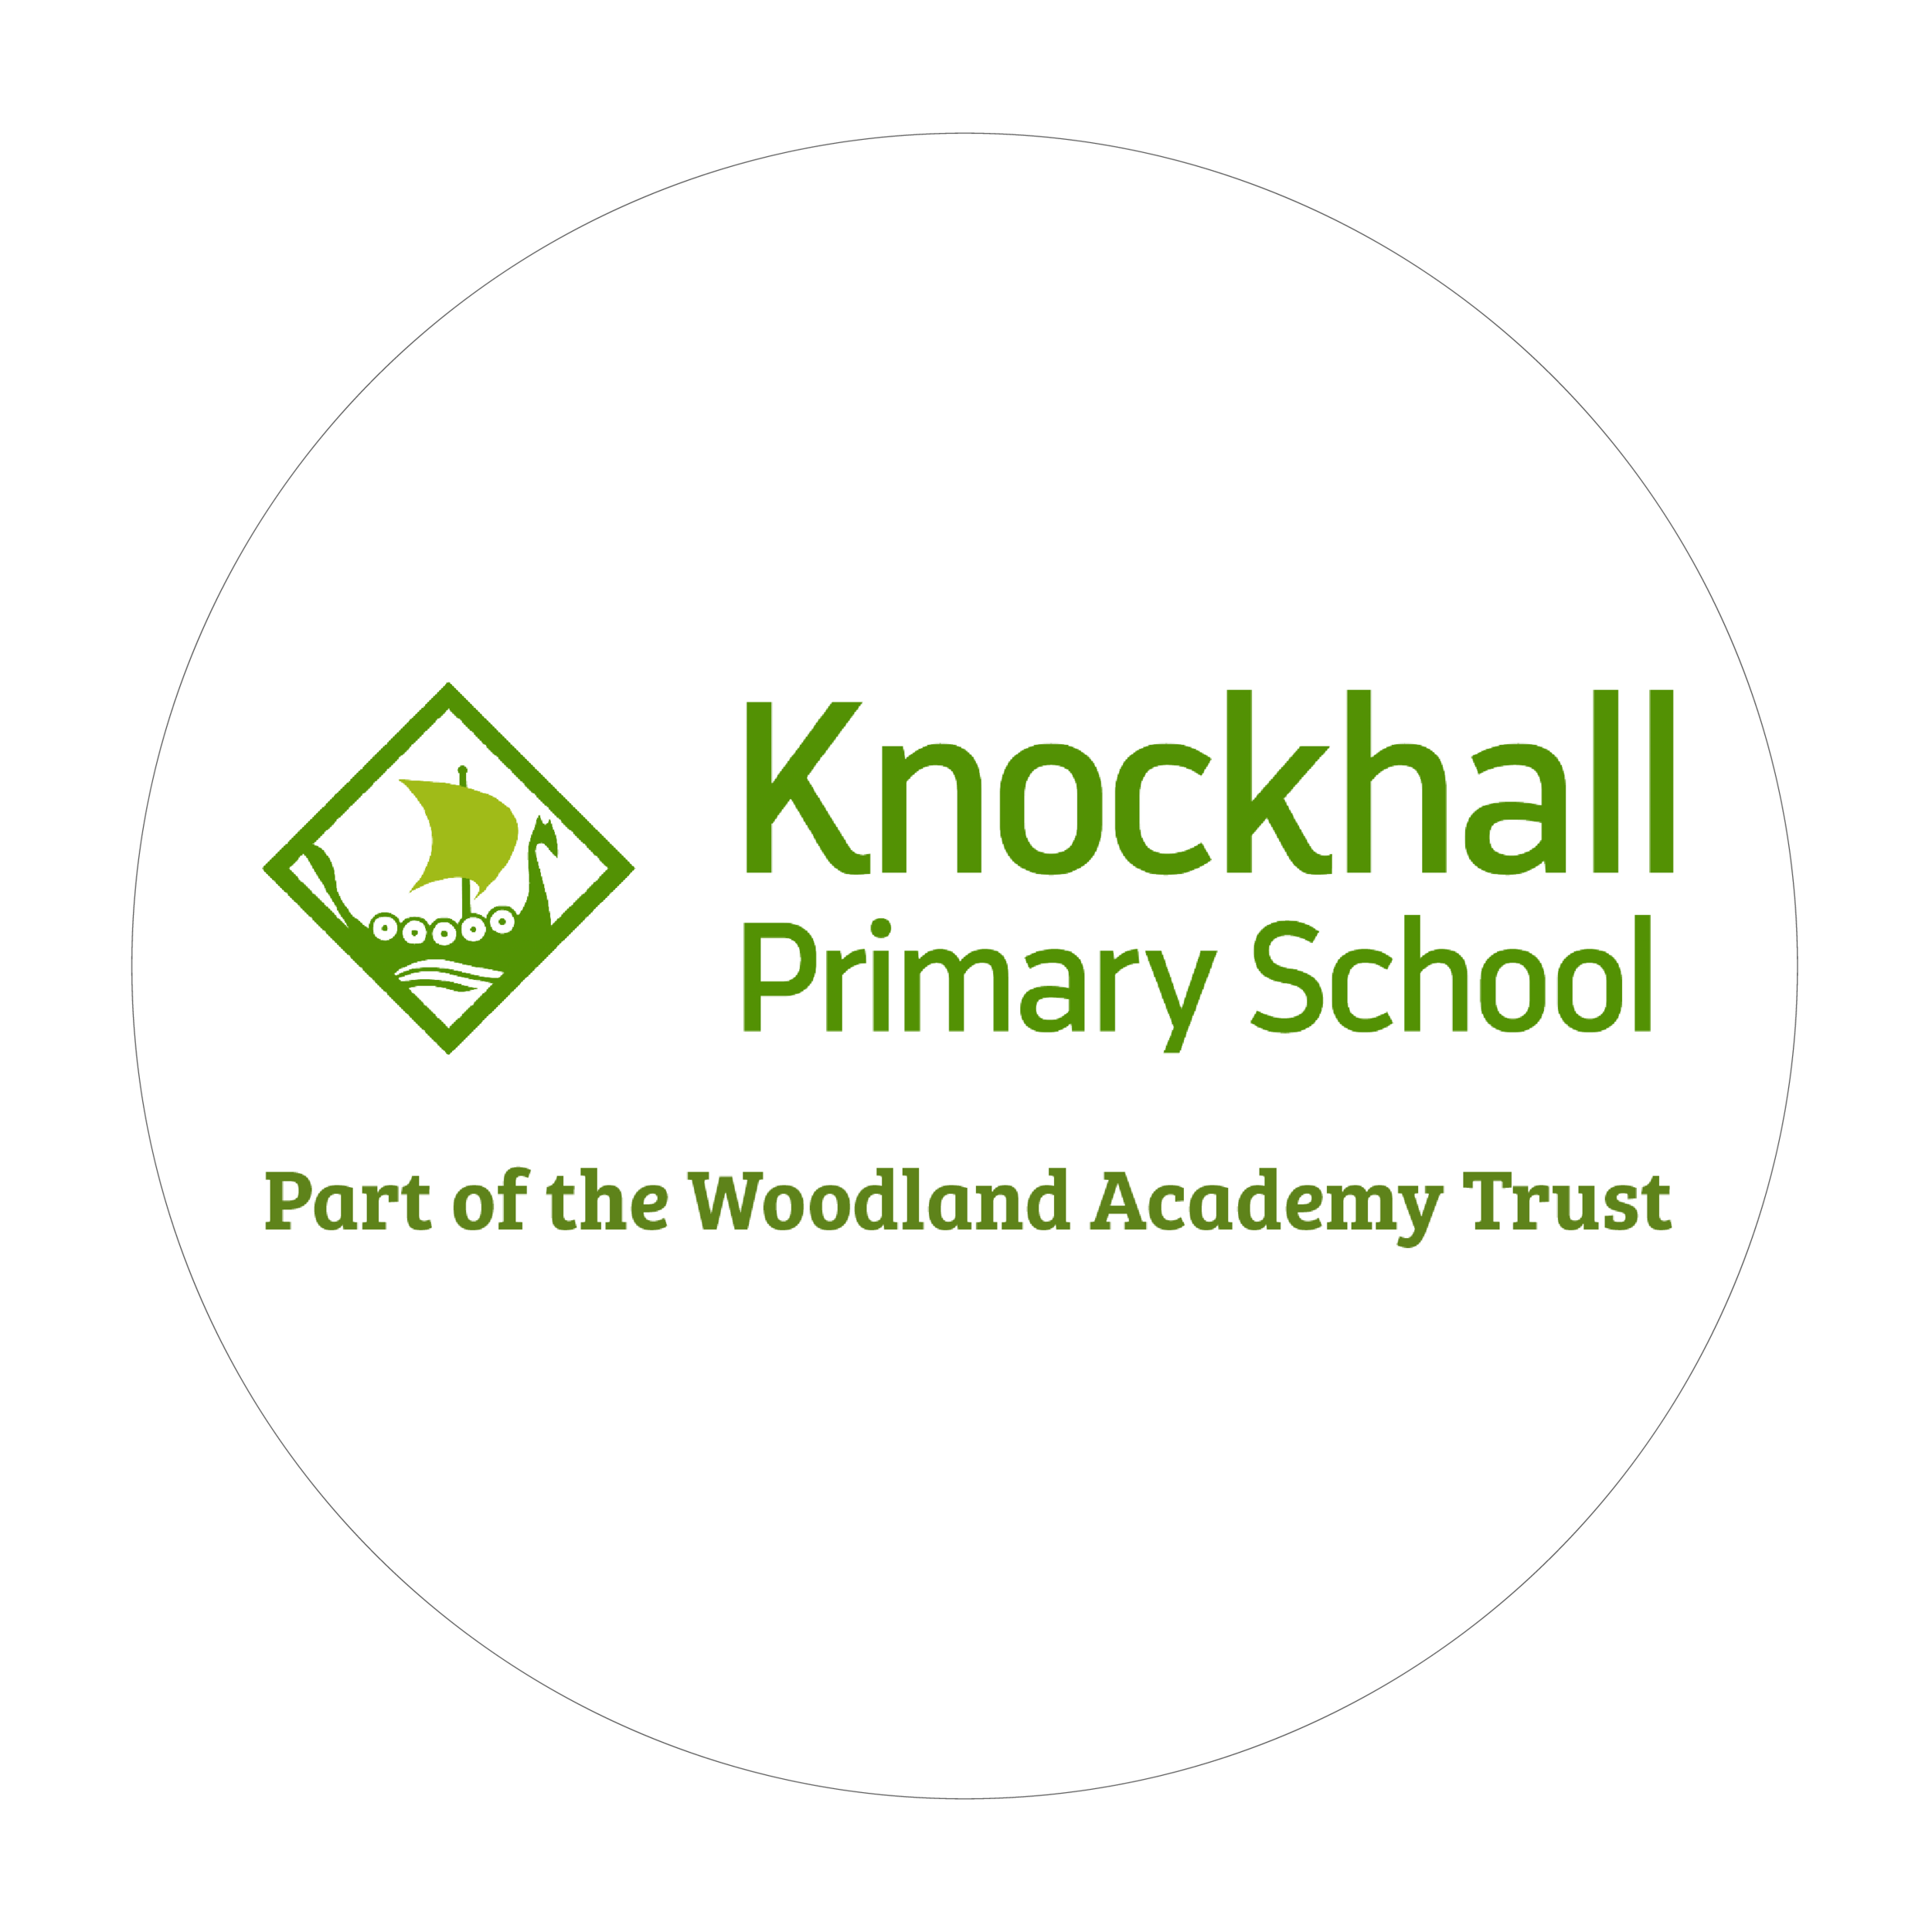 Knockhall Primary School